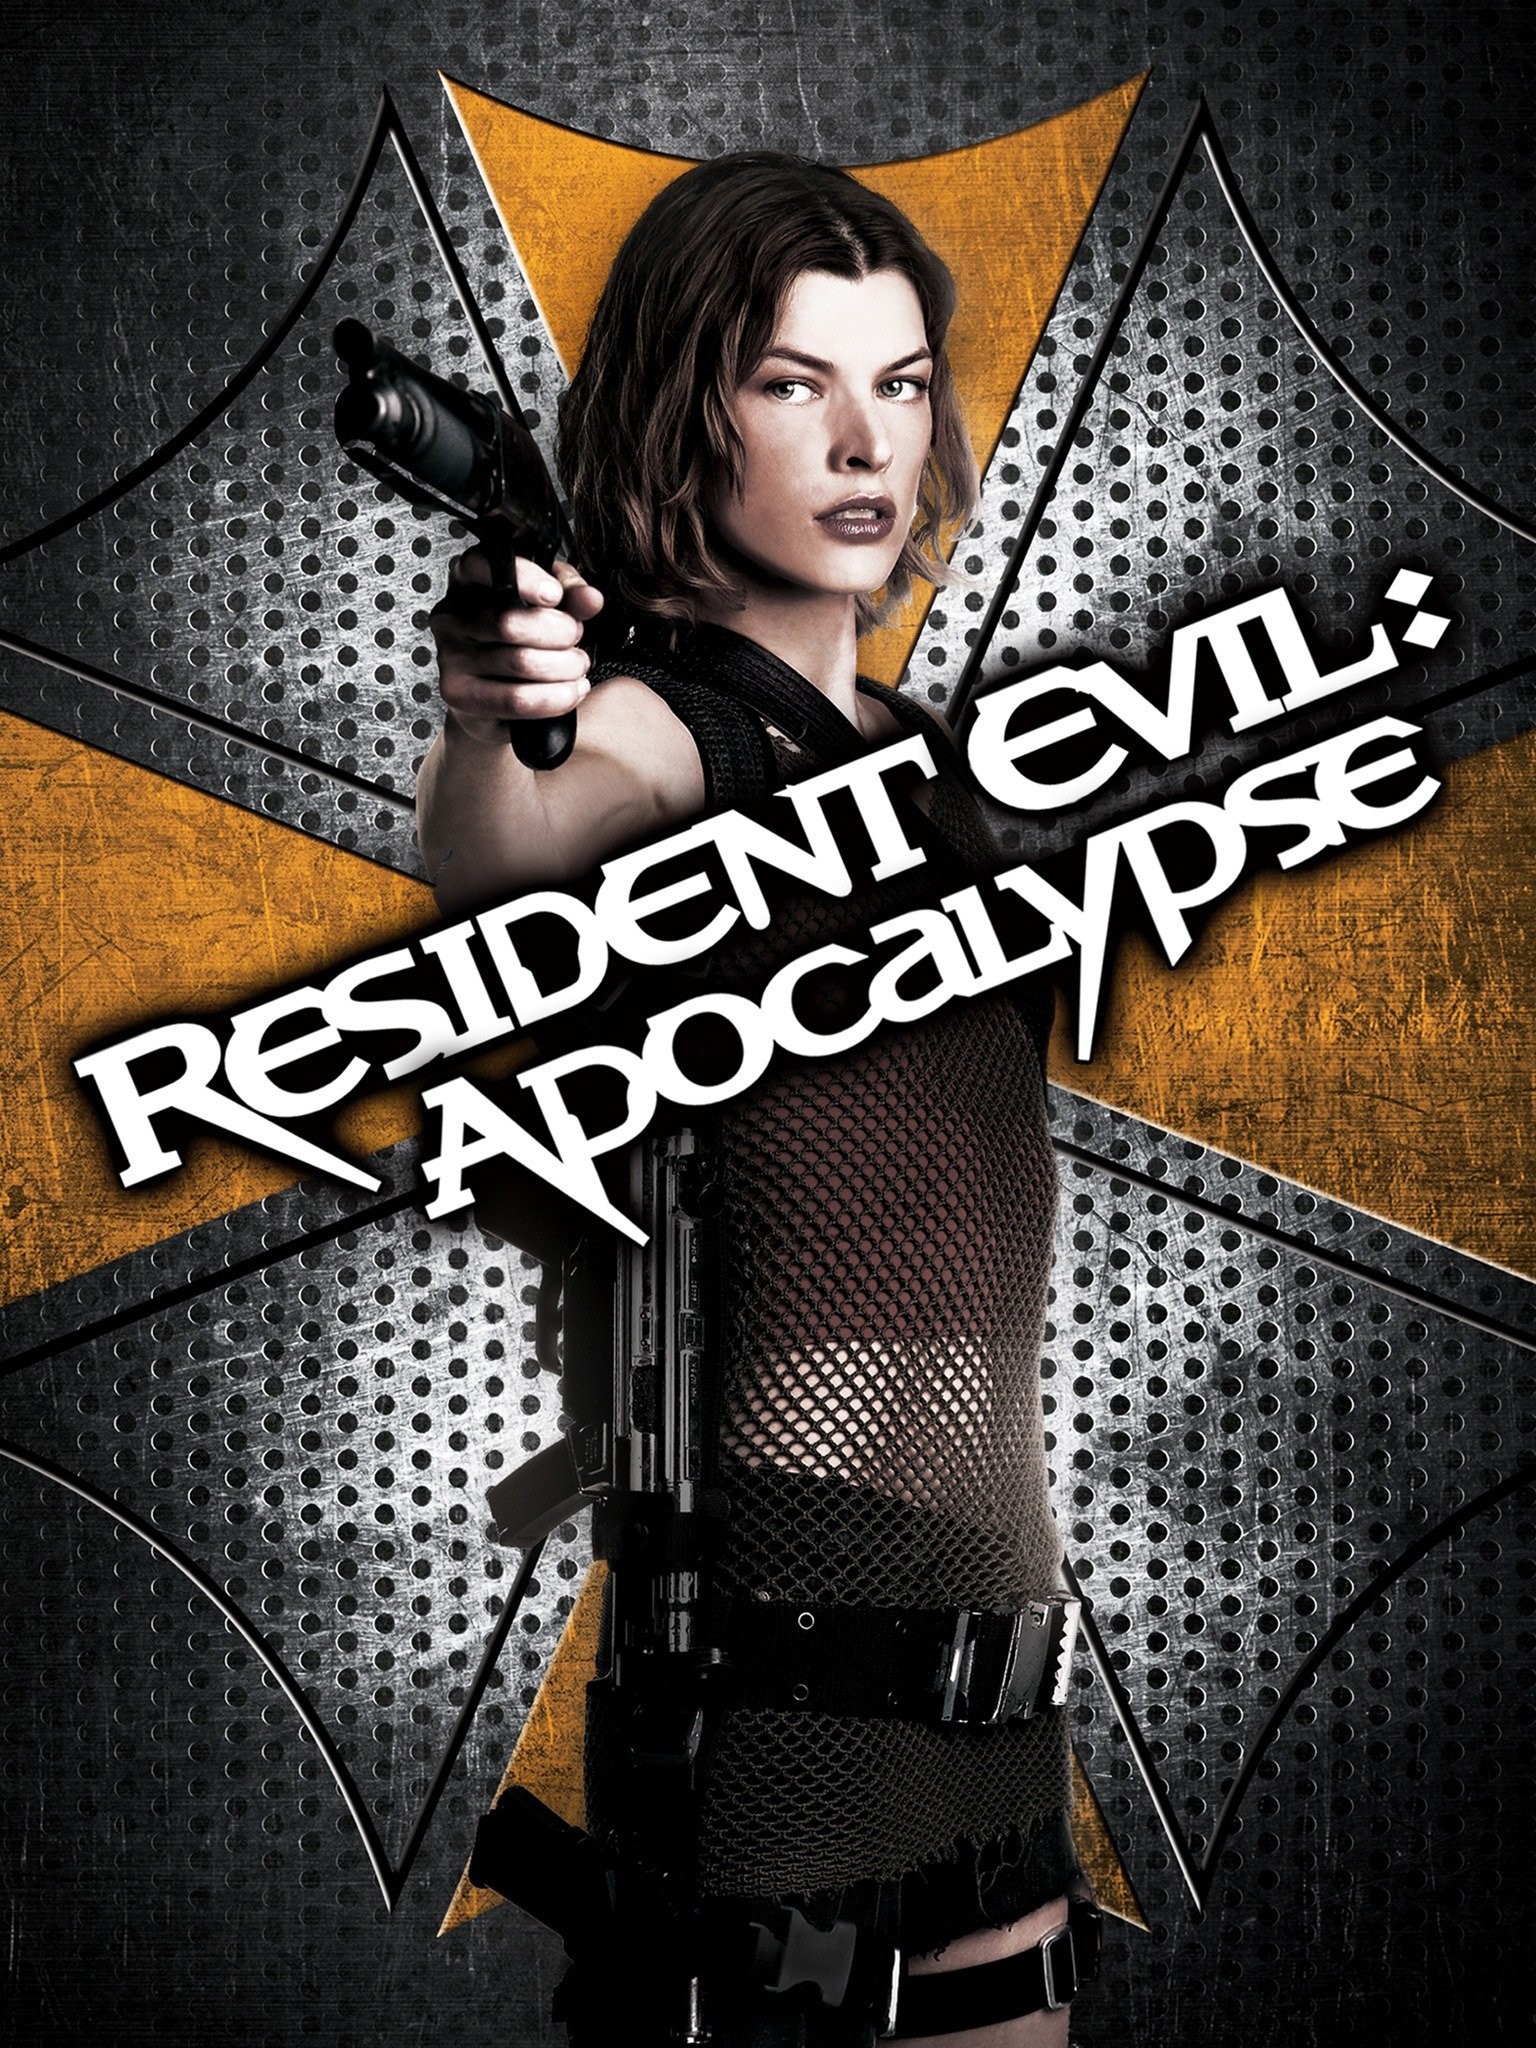 Resident Evil: Apocalypse - Rotten Tomatoes